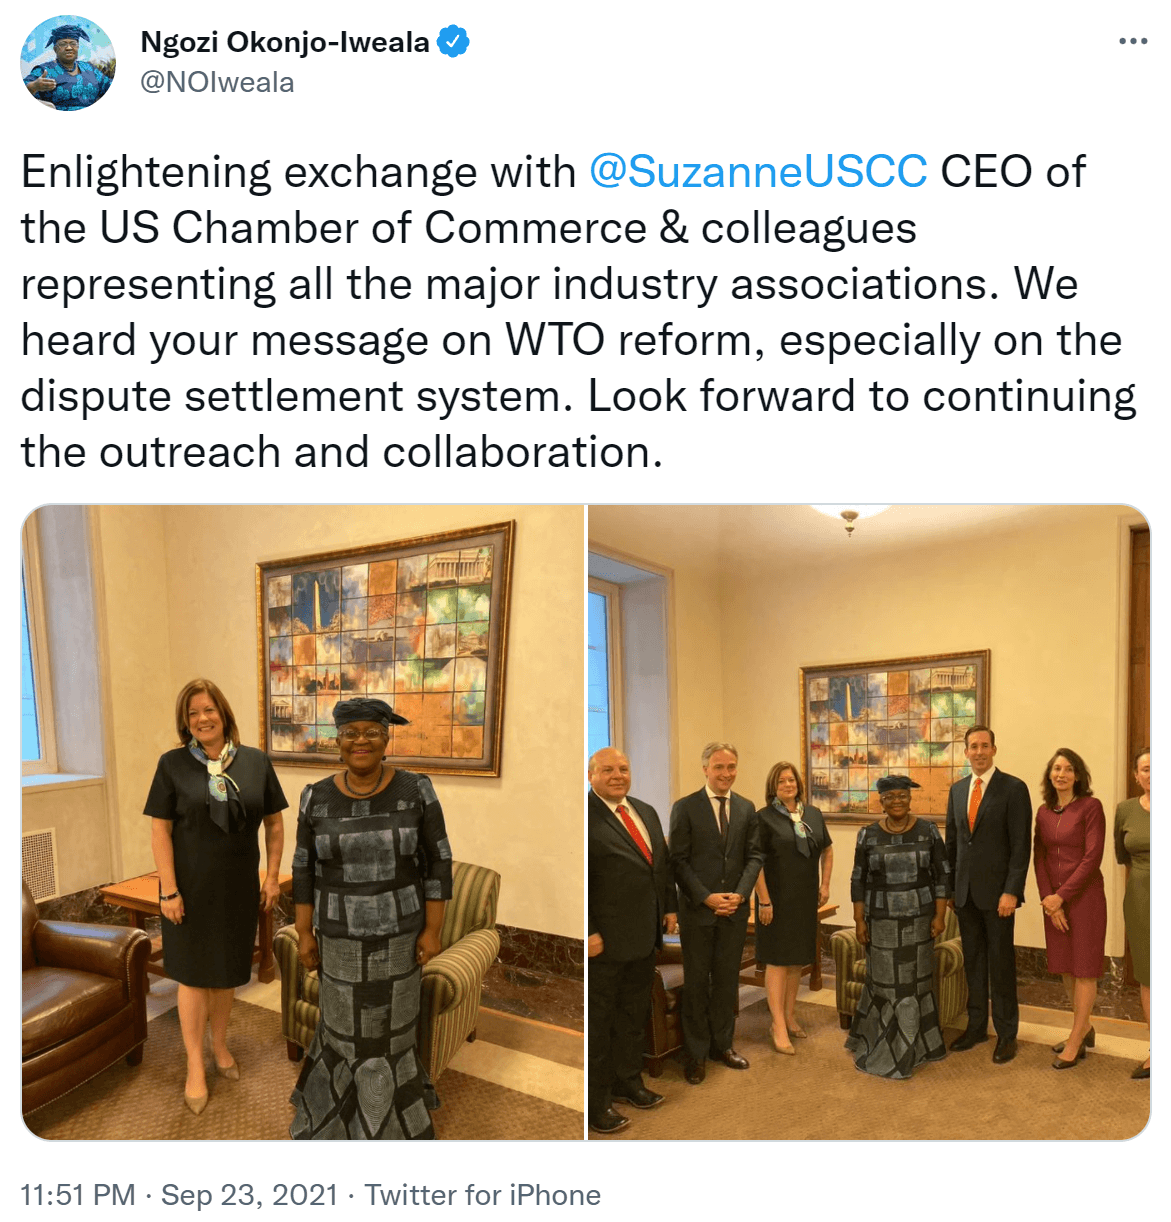 Tweet from Ngozi Okonjo-Iweala